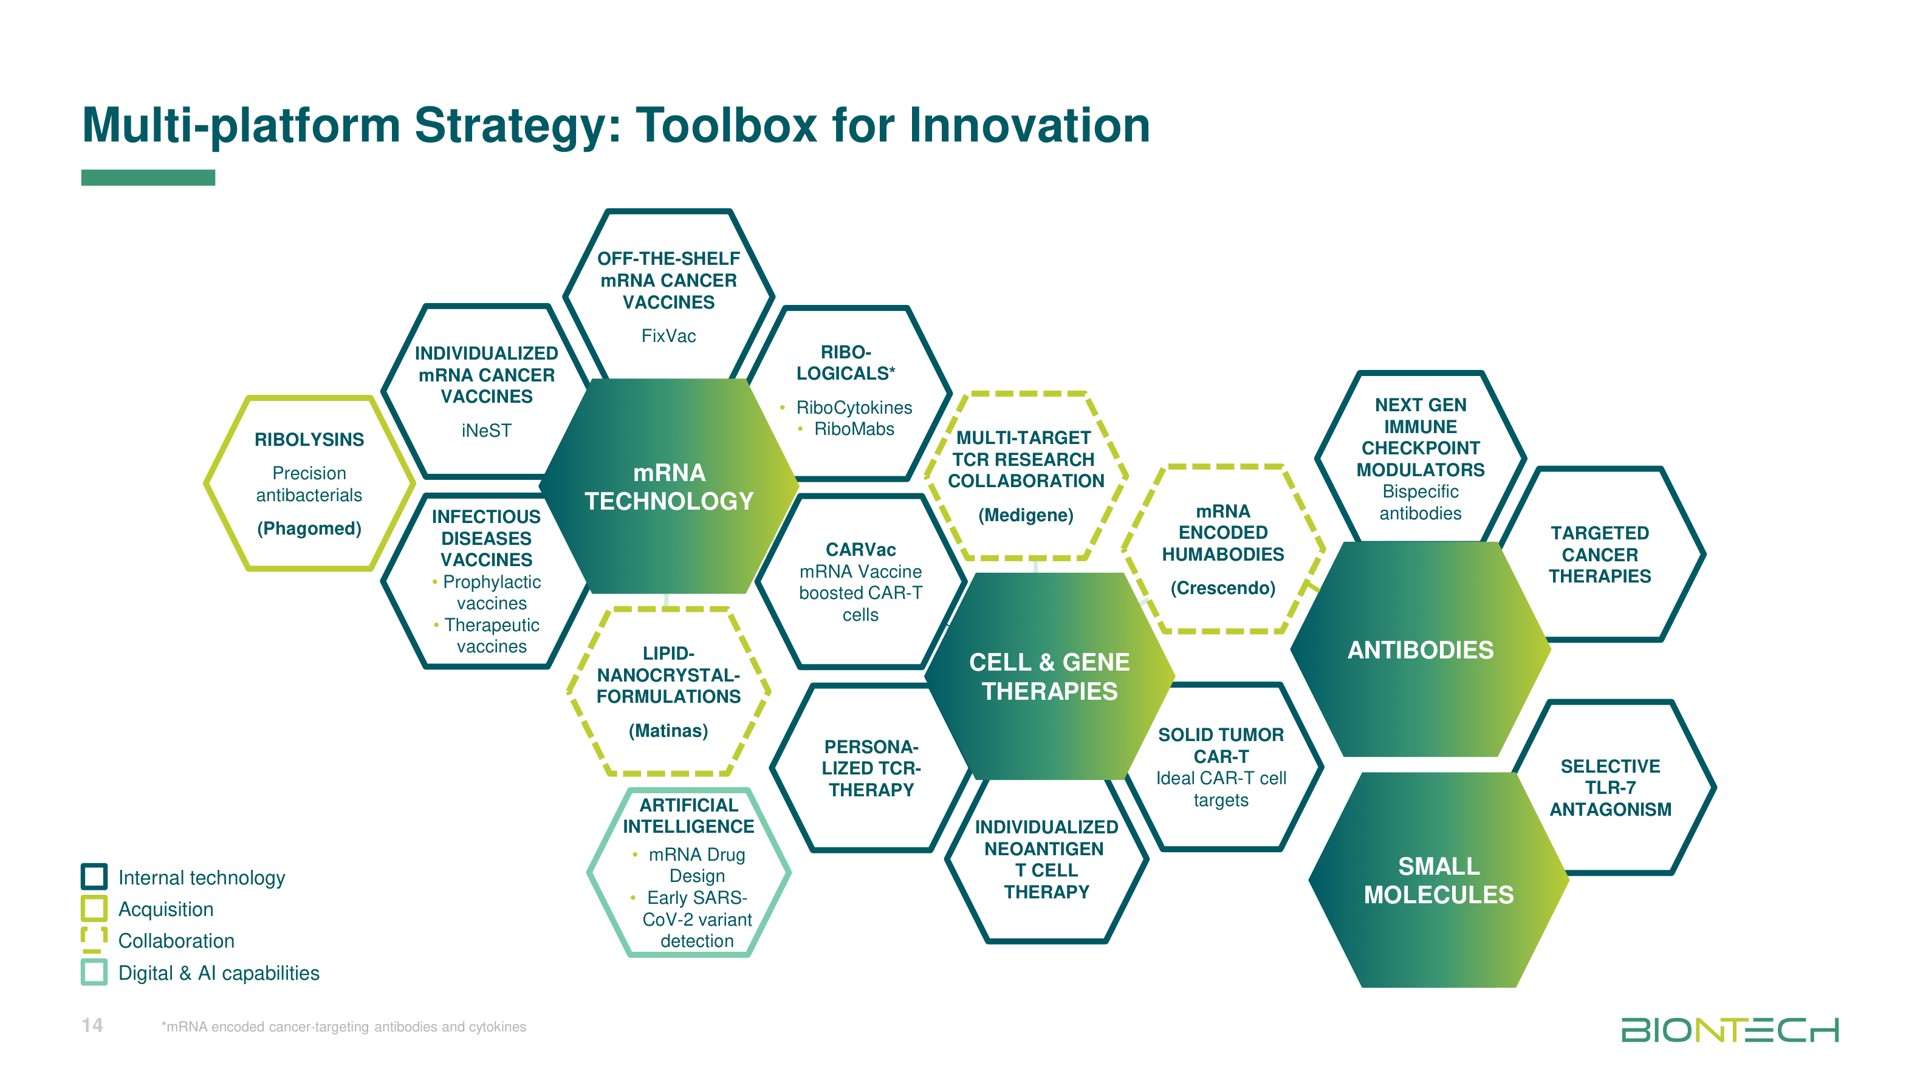 platform strategy toolbox for innovation | BioNTech